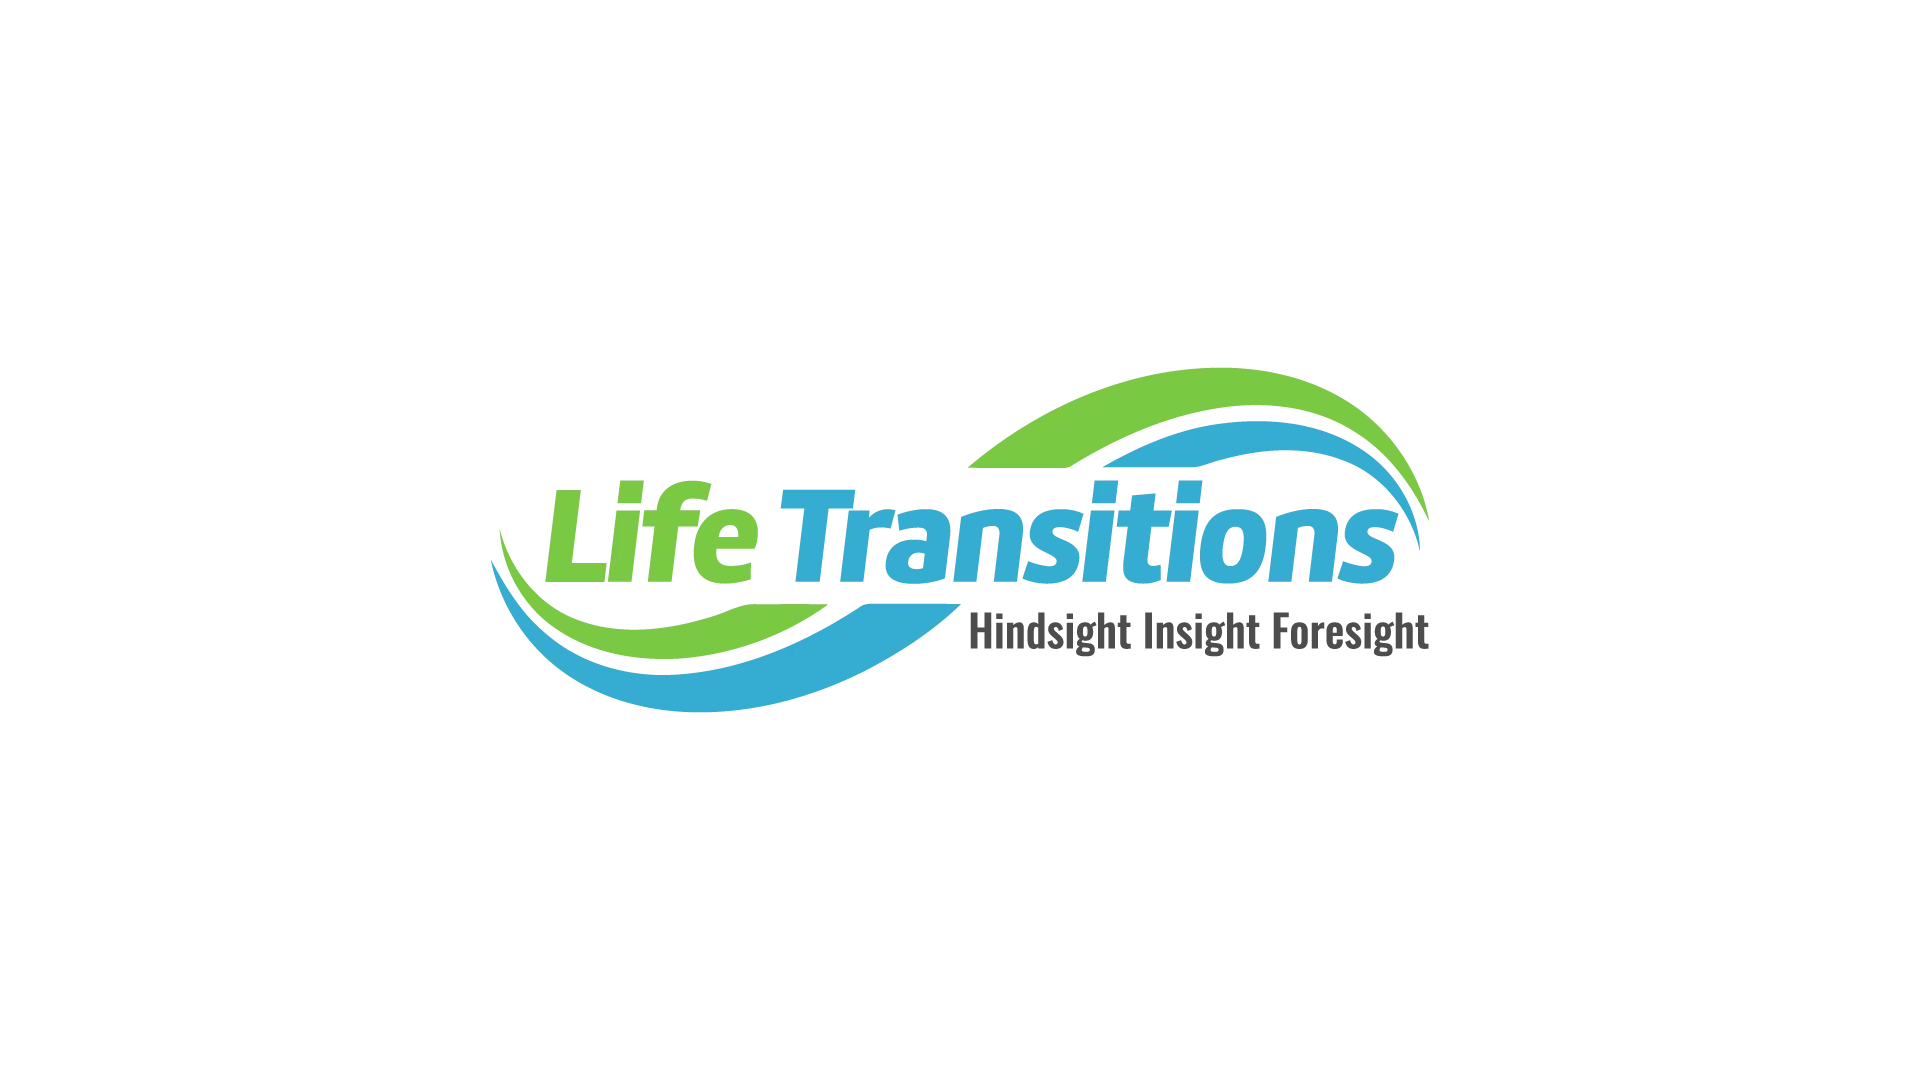 Life Transitions logo